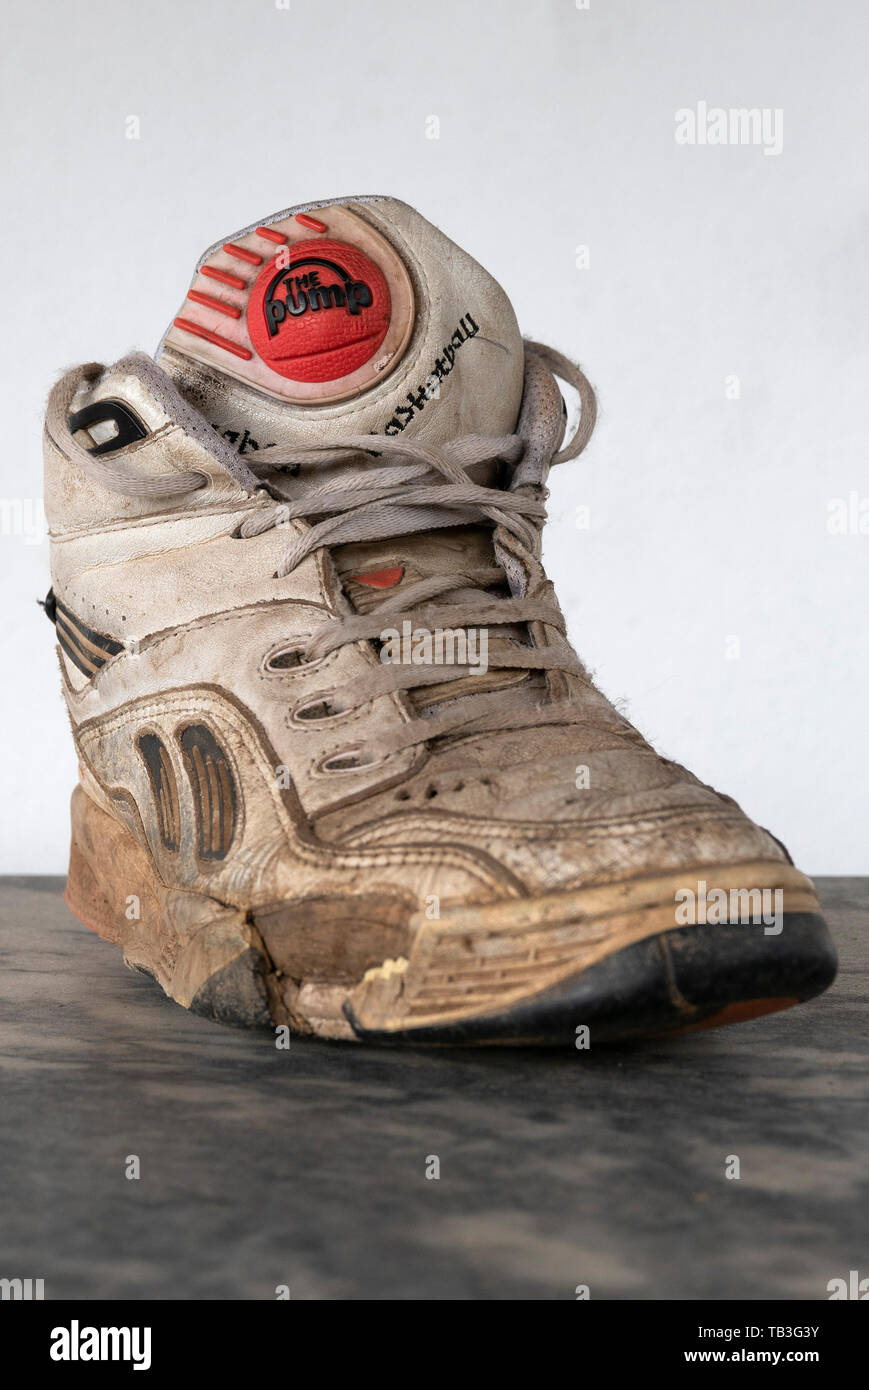 worn 1990s Reebok Pump white basketball Stock Photo -